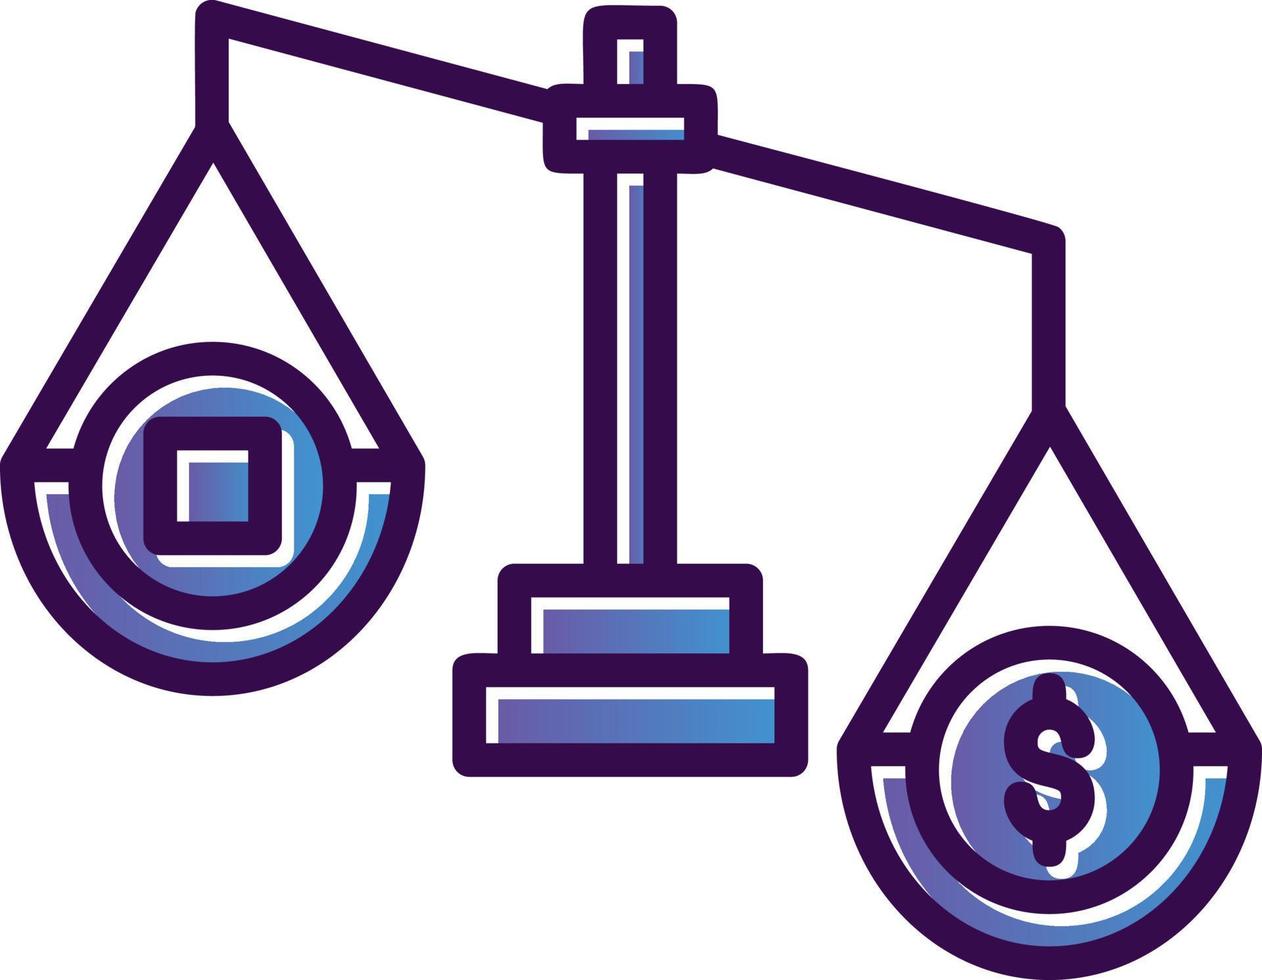 Money Scale Vector Icon Design